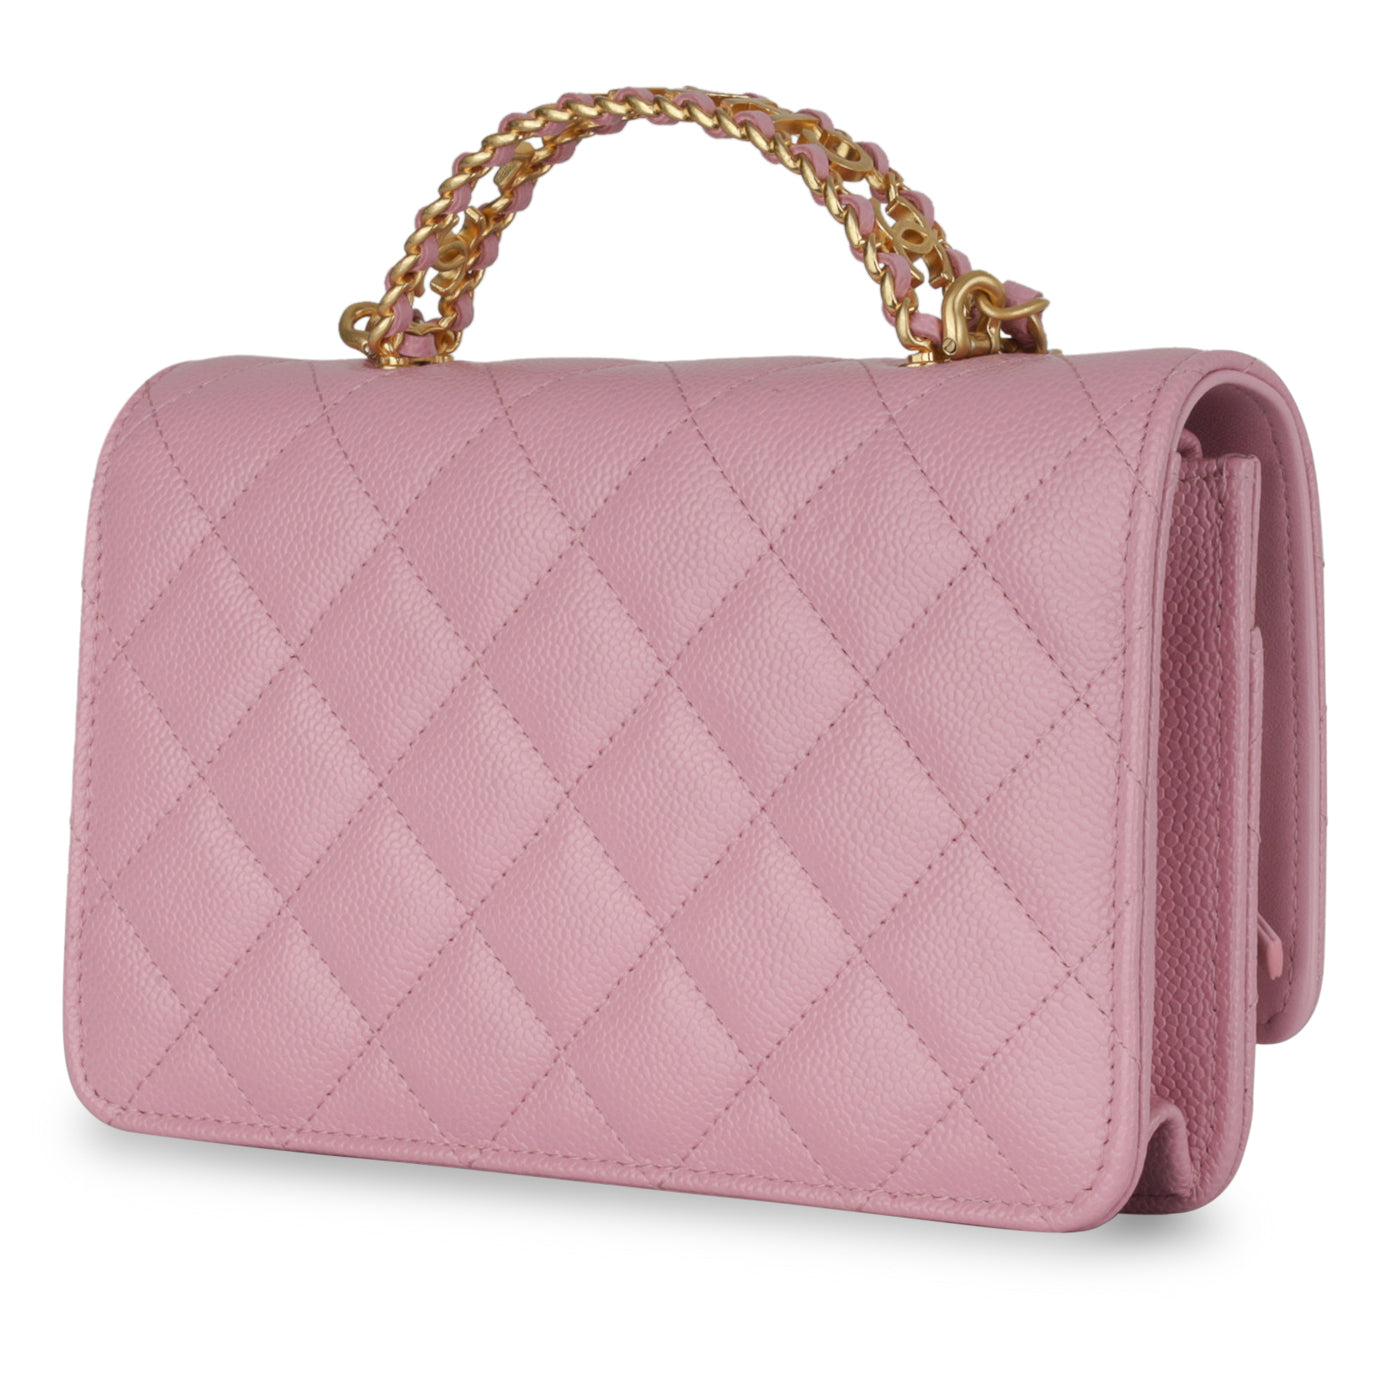 Chanel WOC Caviar Soft Pink Caviar Leather Bag  Chanel mini flap bag  Bags Chanel woc